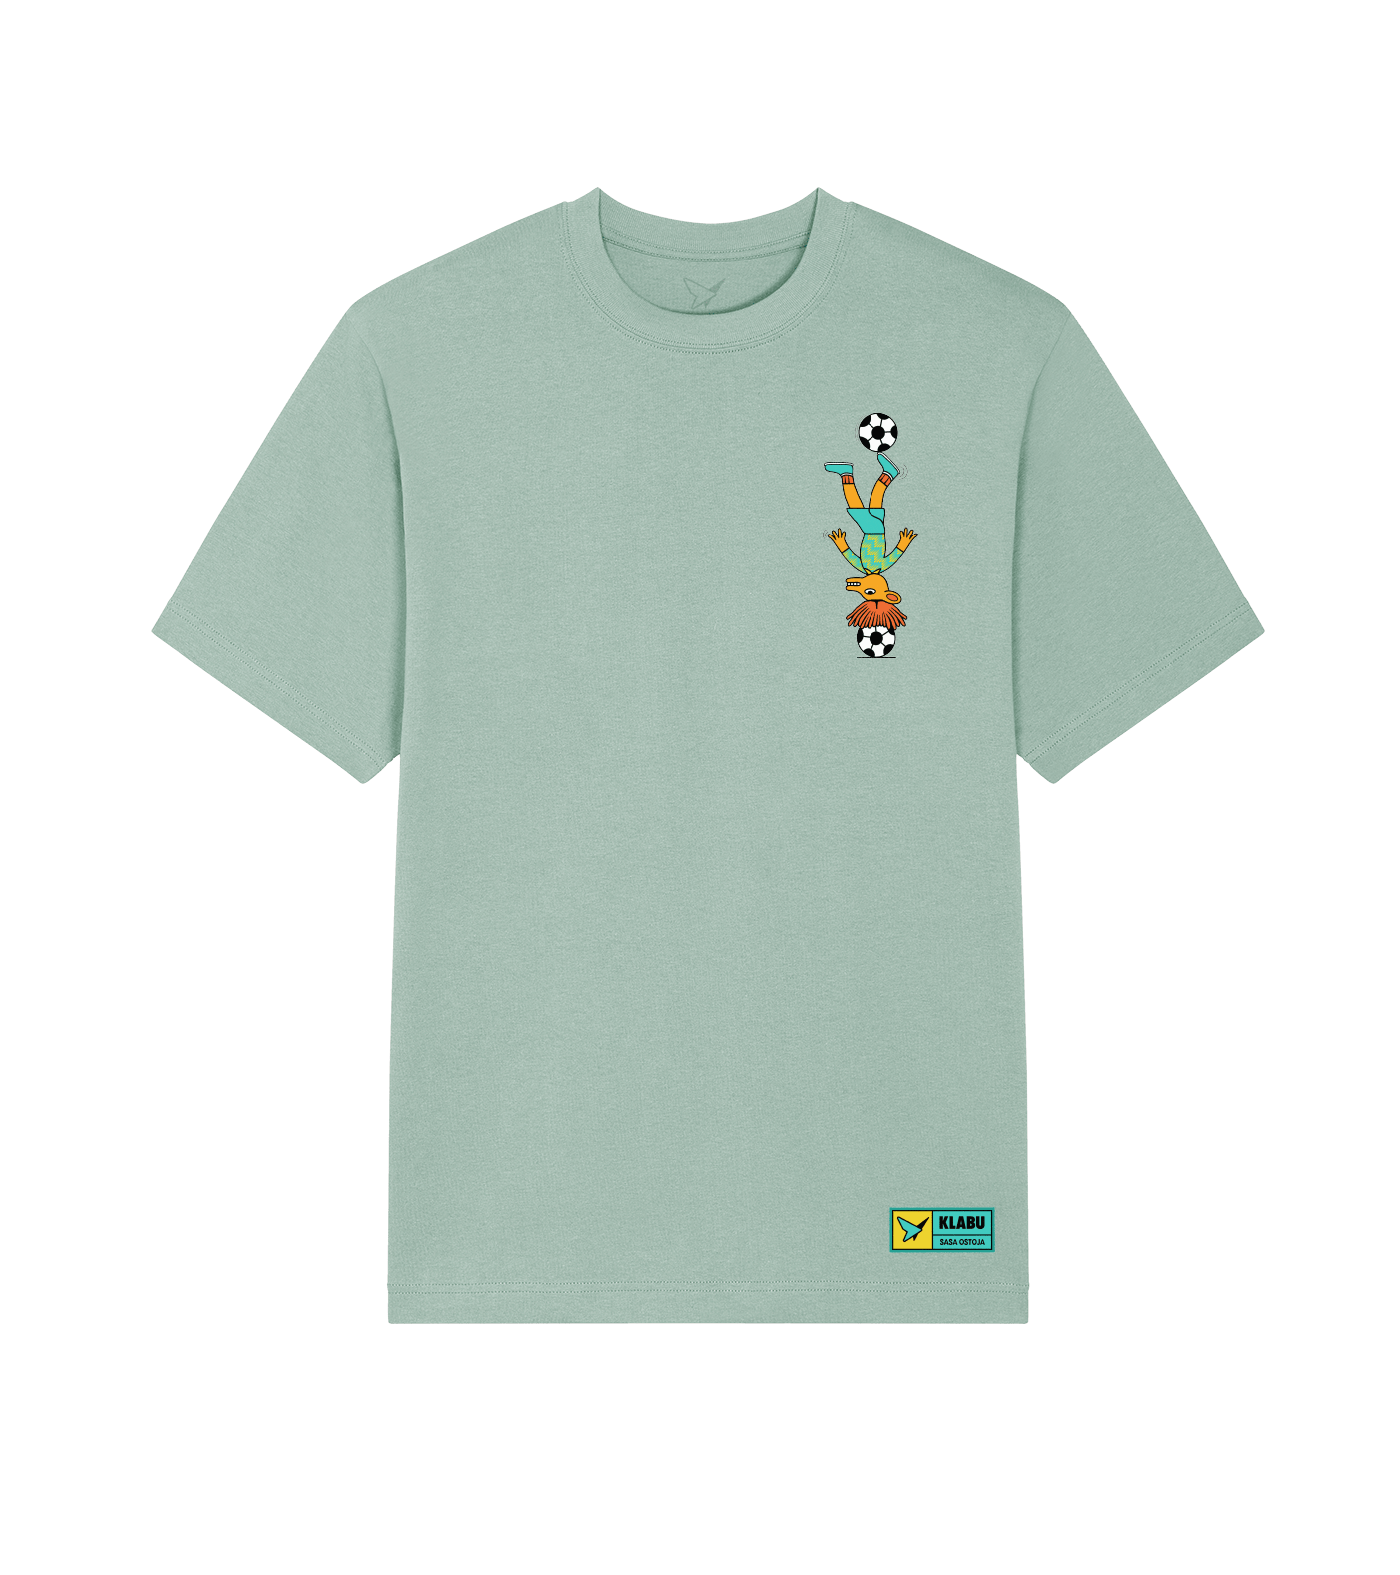 KLABU cotton t-shirt with graphics